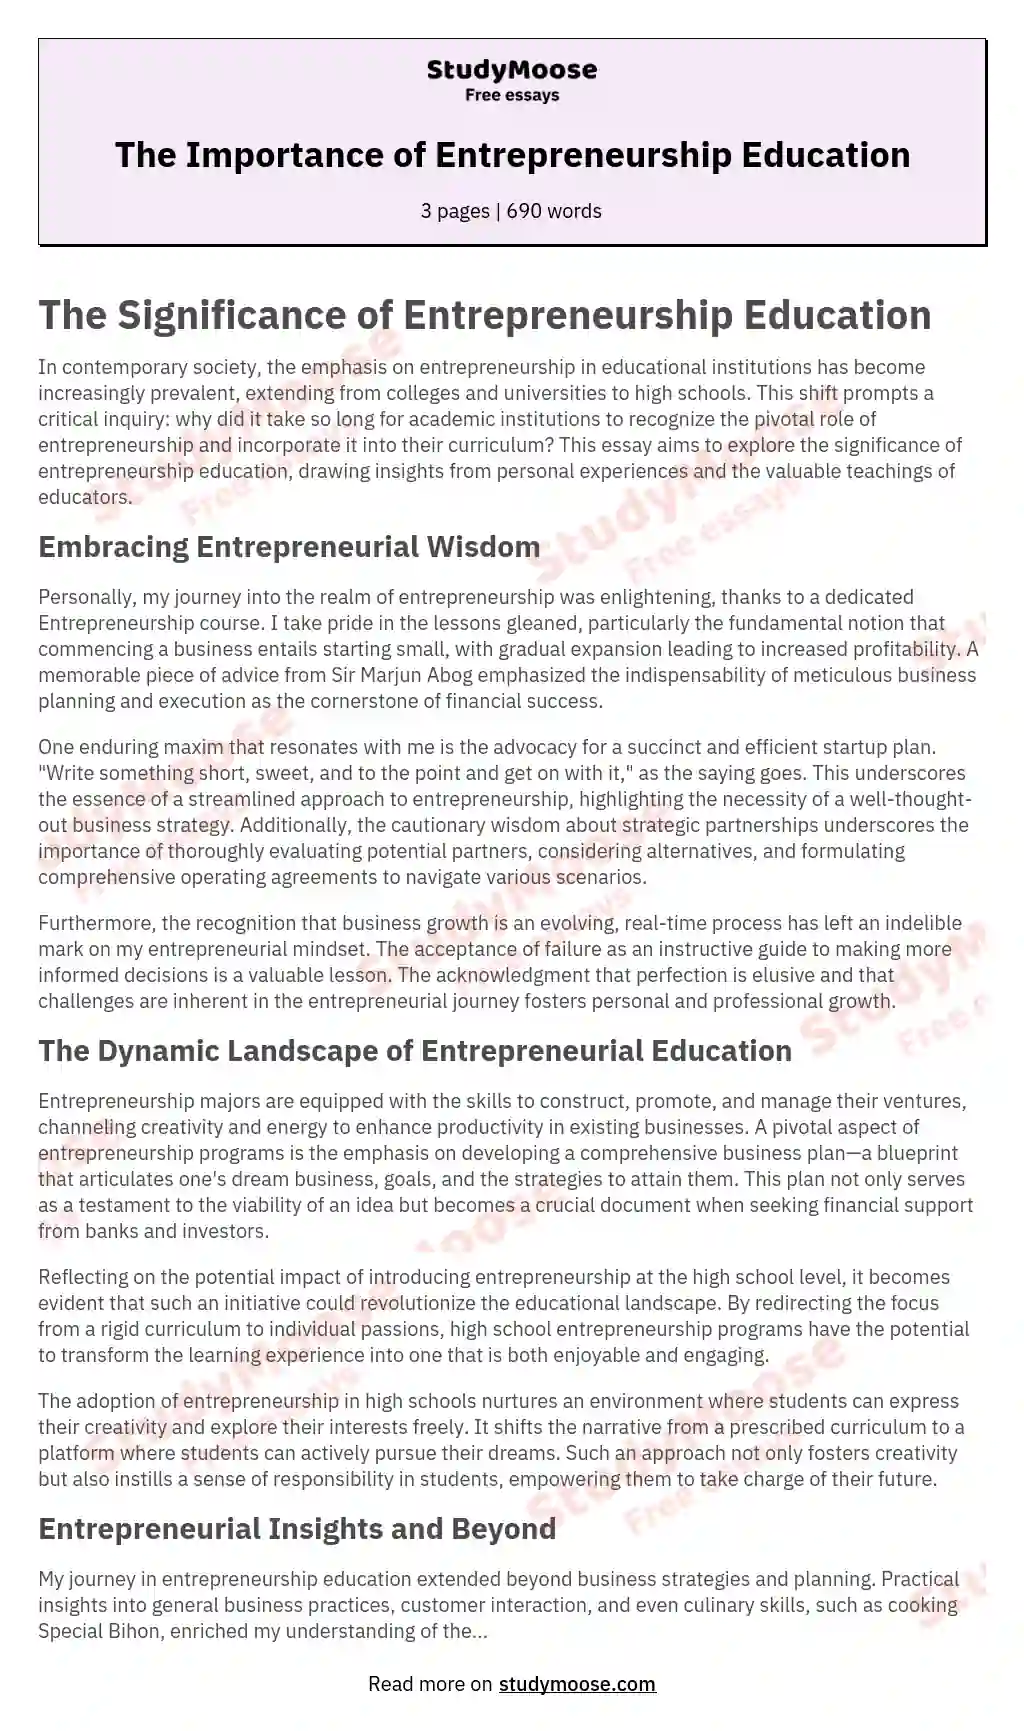 The Importance of Entrepreneurship Education essay